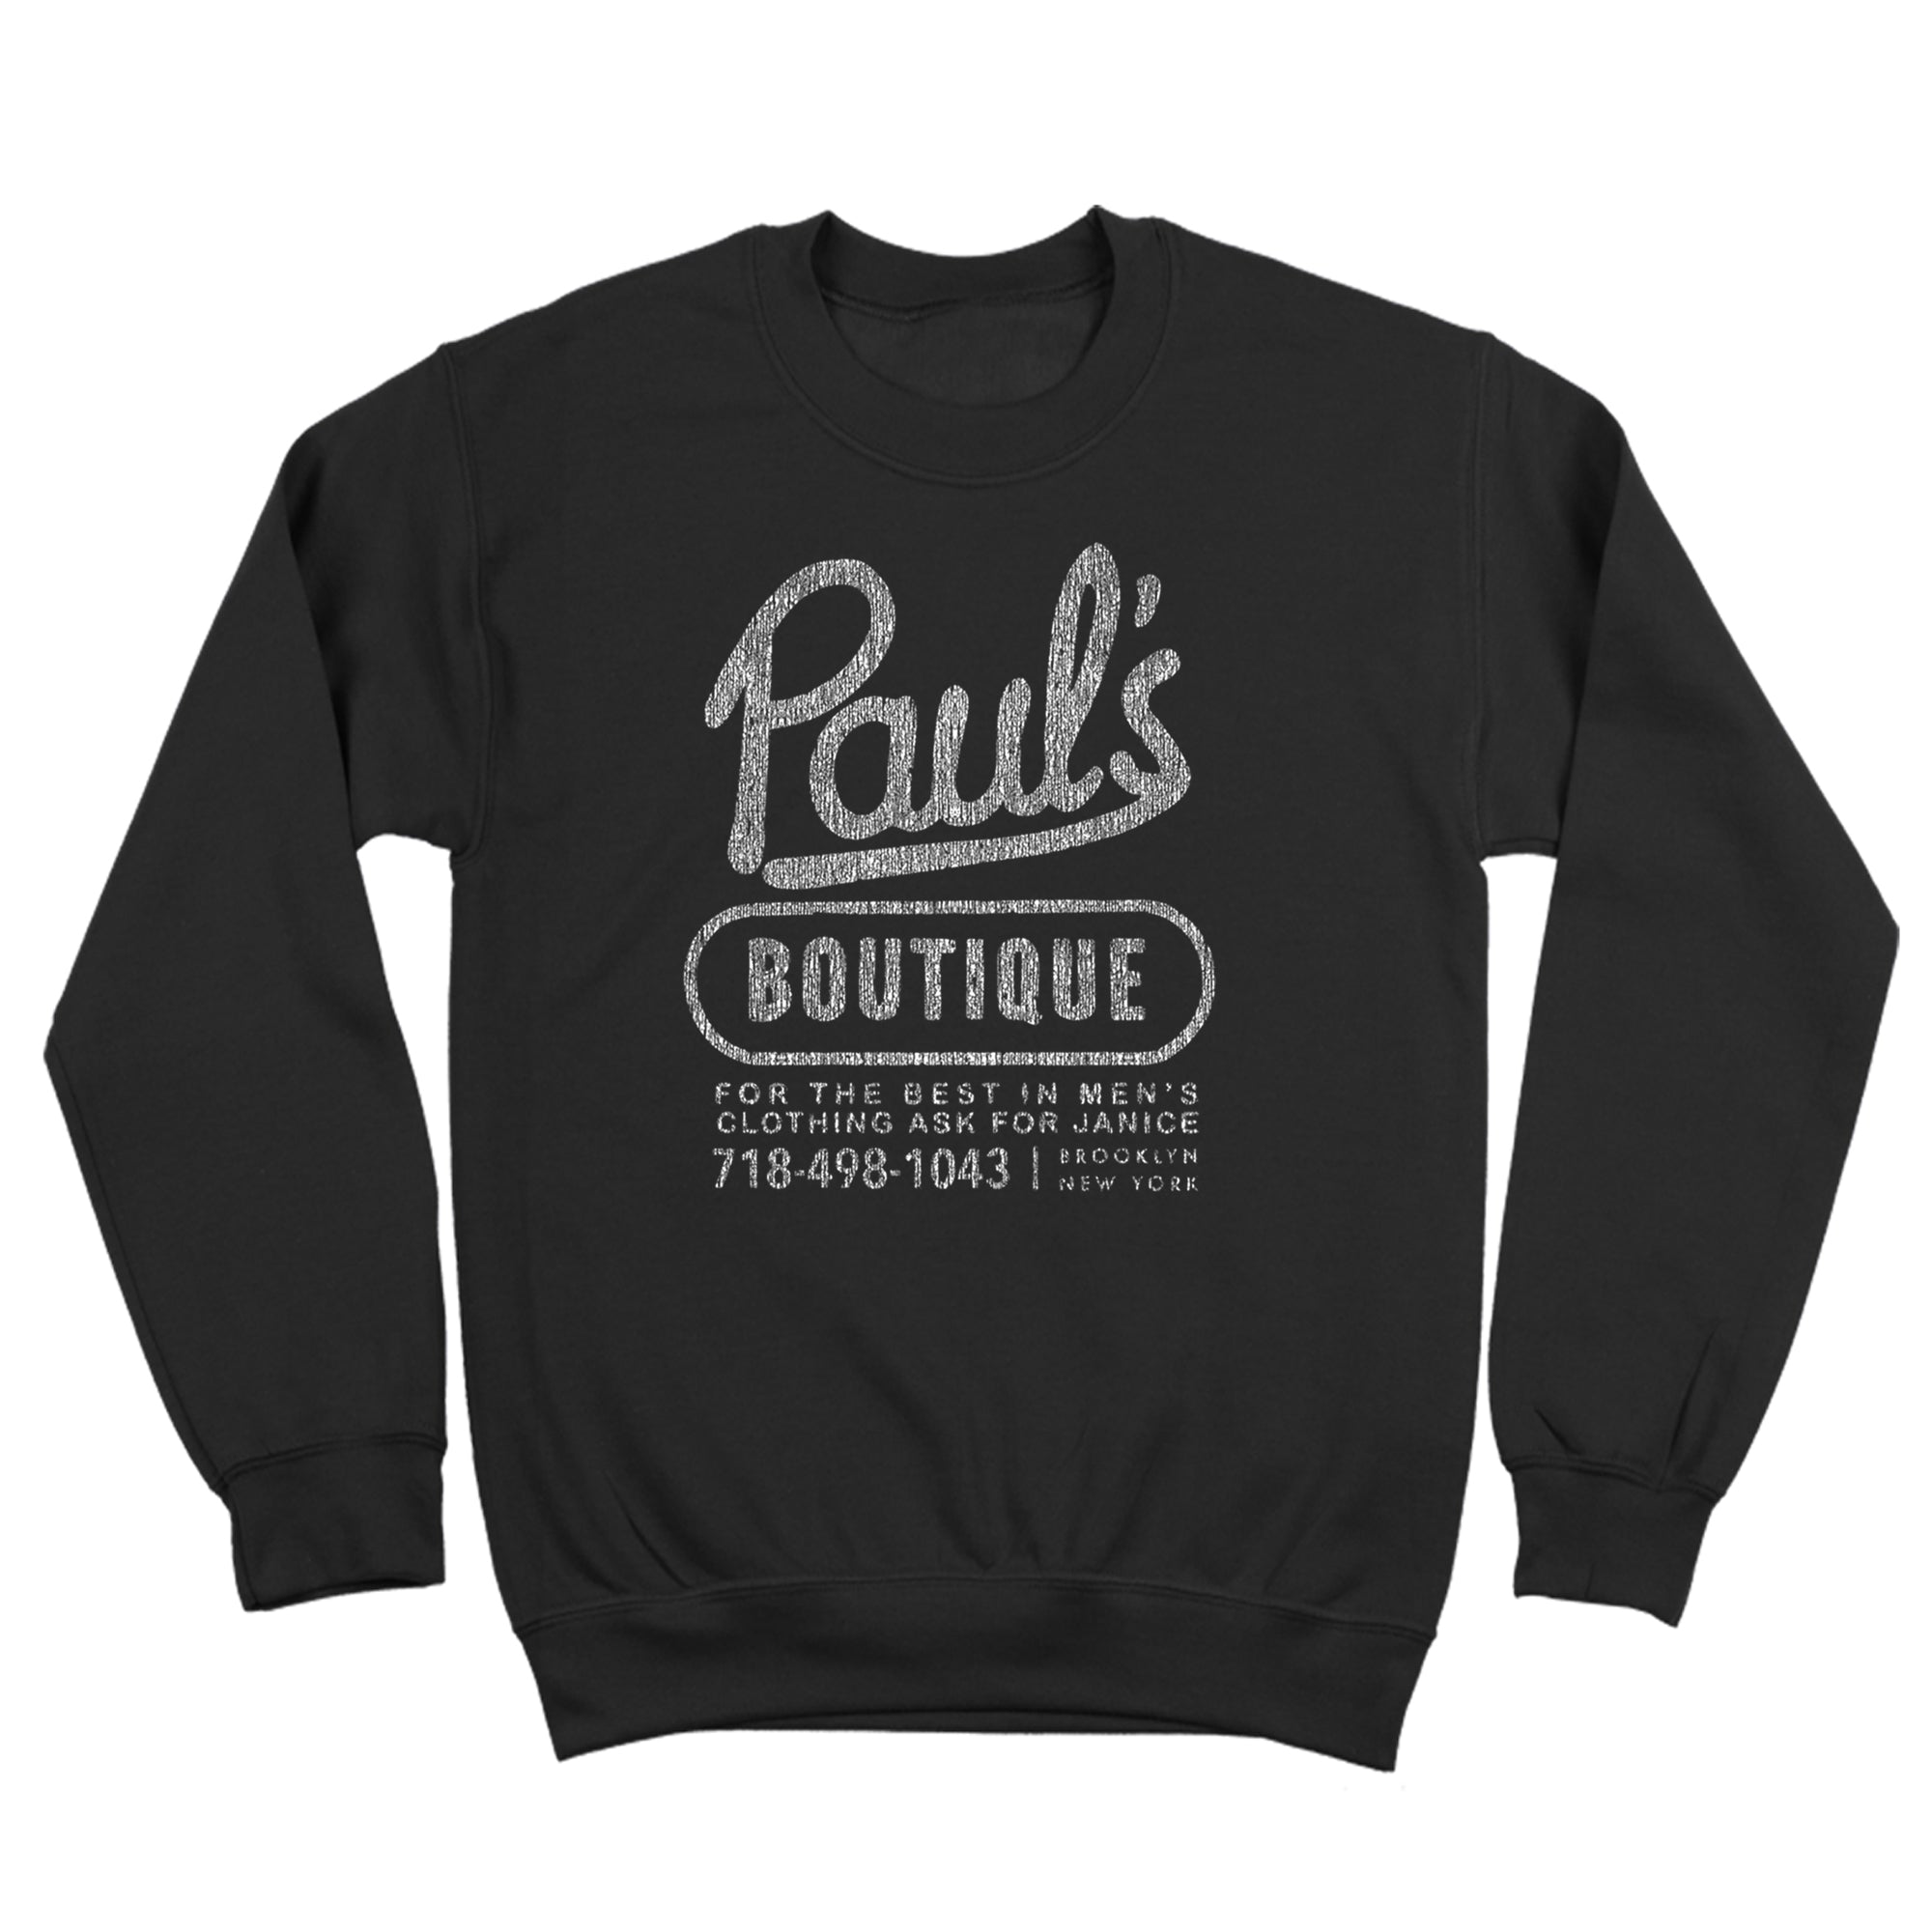 Paul's Boutique Clothing NYC Tshirt - Donkey Tees